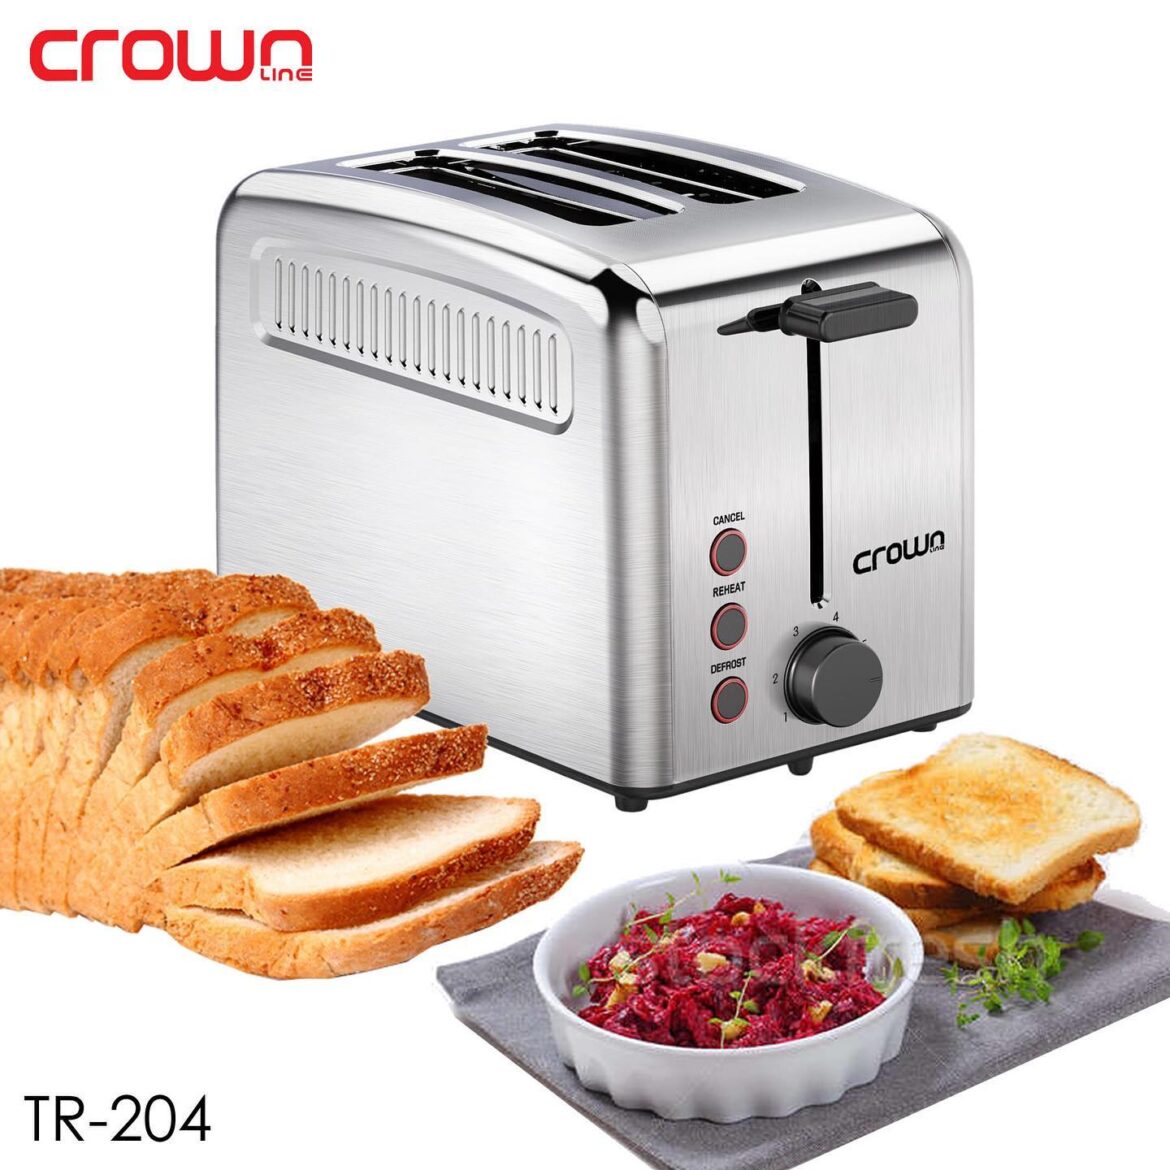 Crownline Bread Toaster